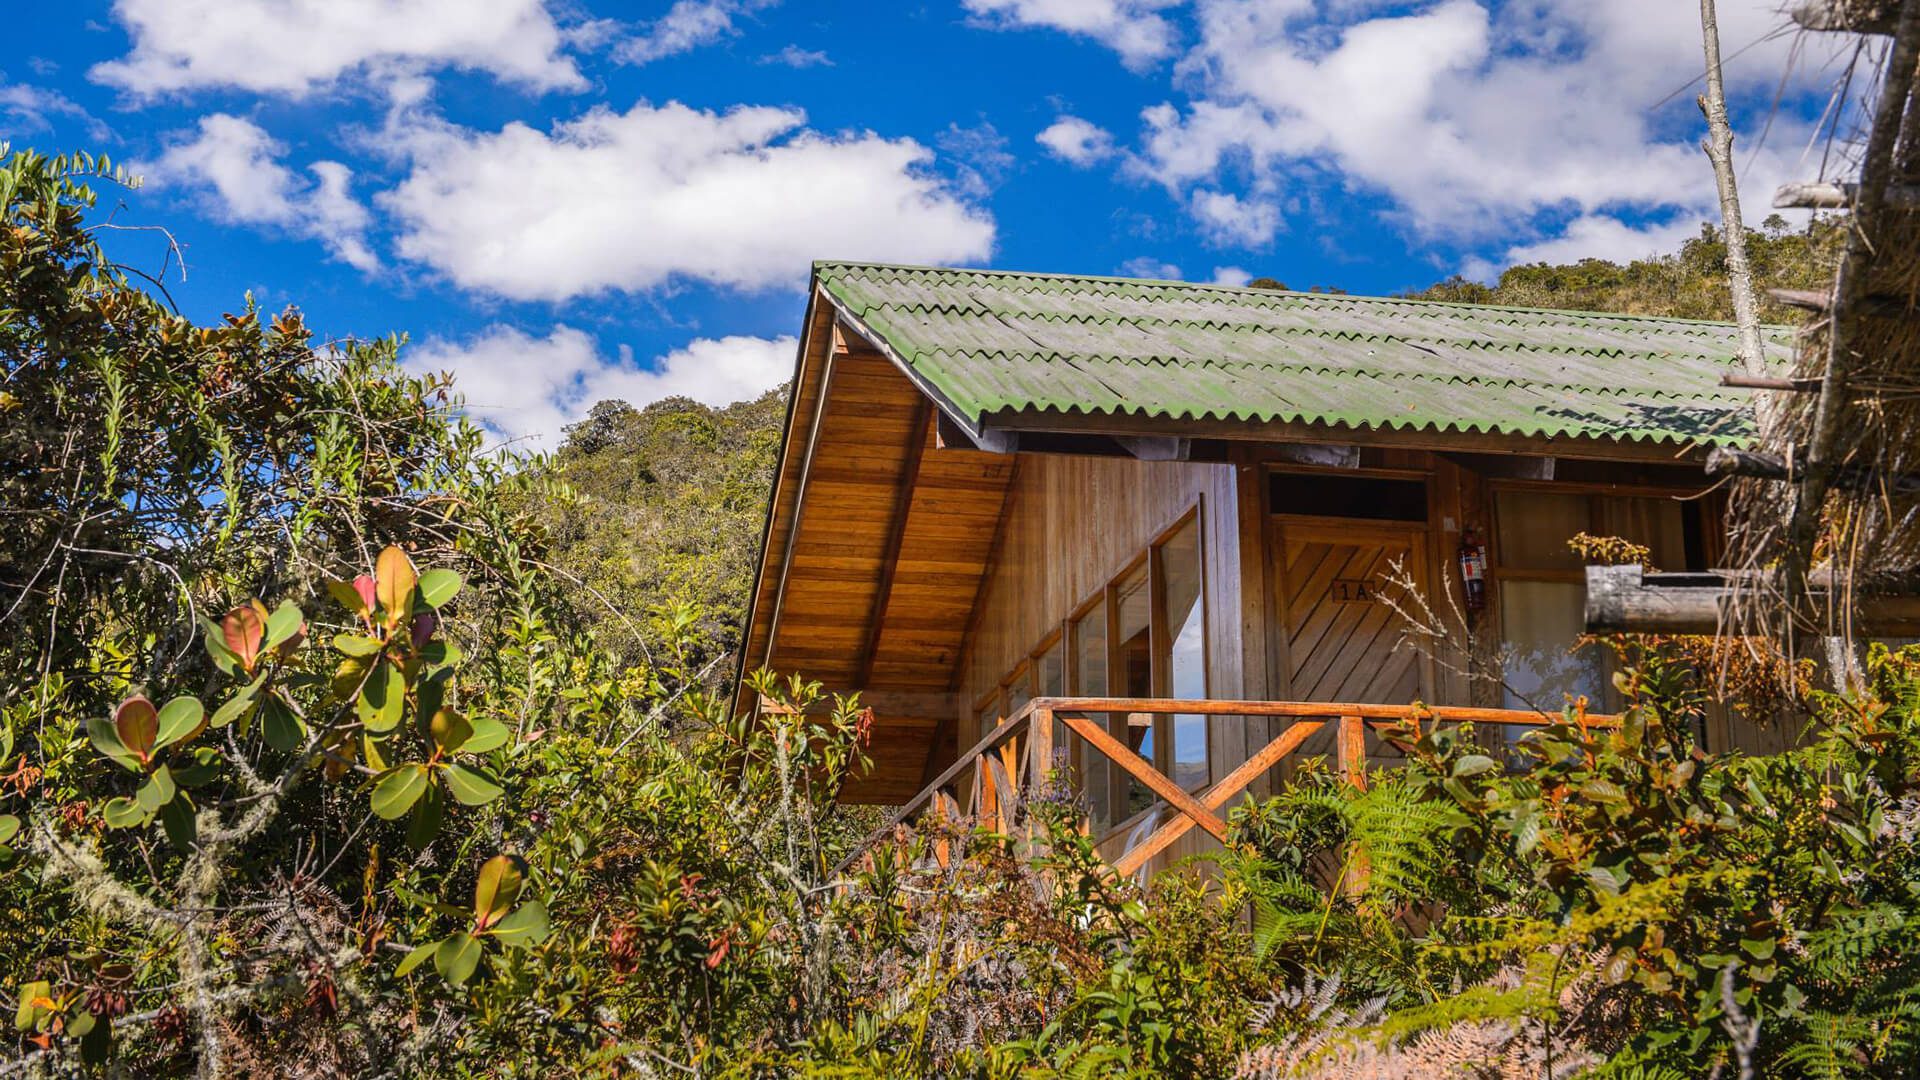 One of the comfortable bungalows at Wayqecha Biological Station in Manu. ©️ Emanuele Biggi